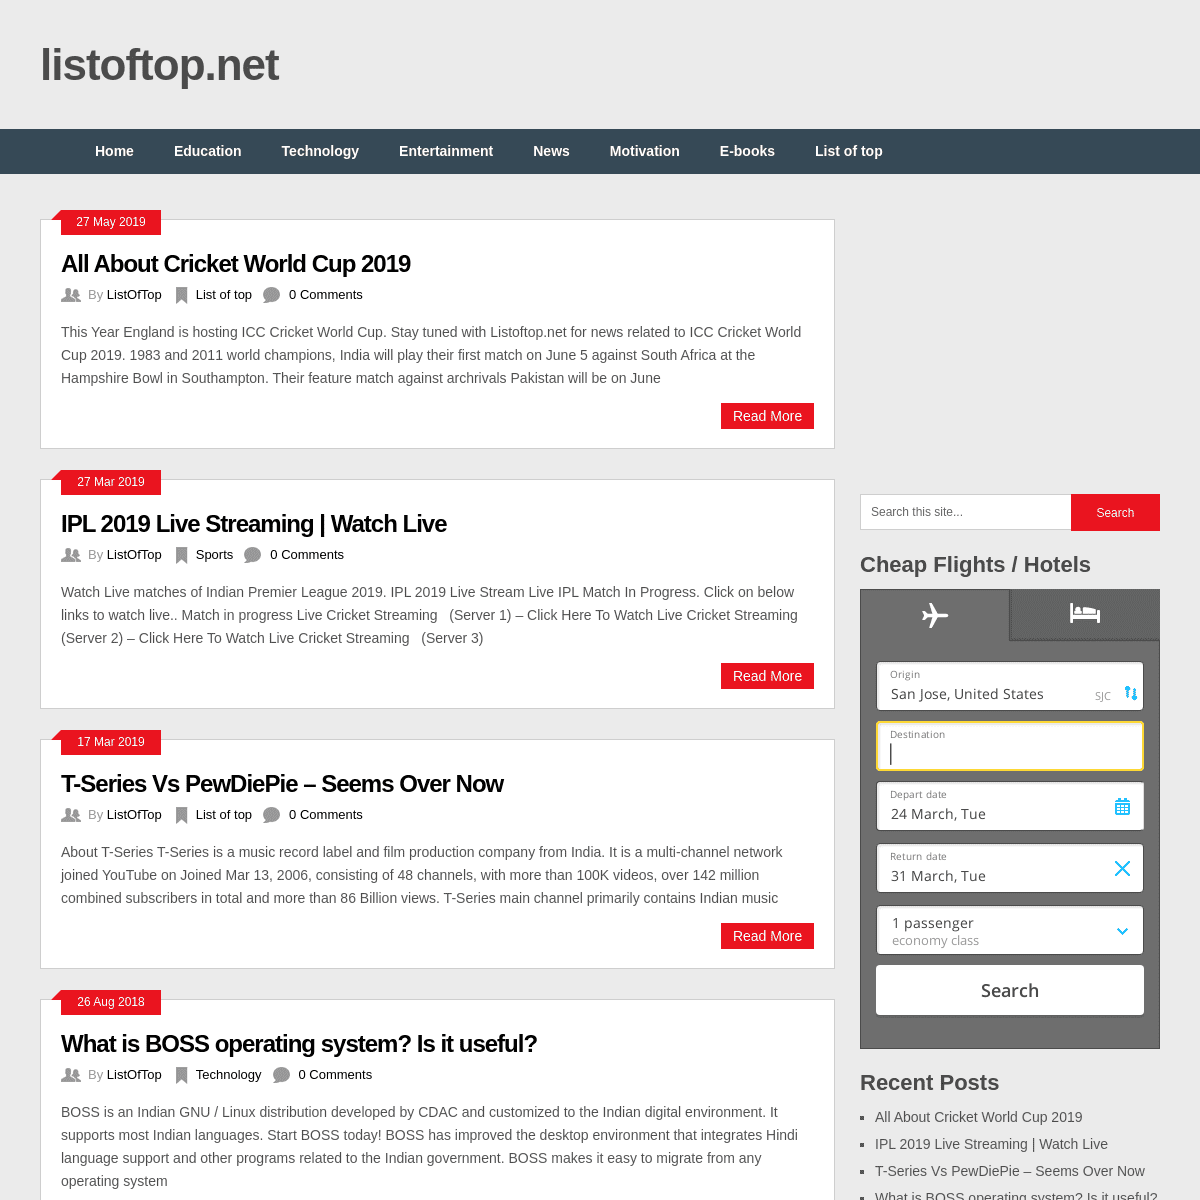 A complete backup of listoftop.net